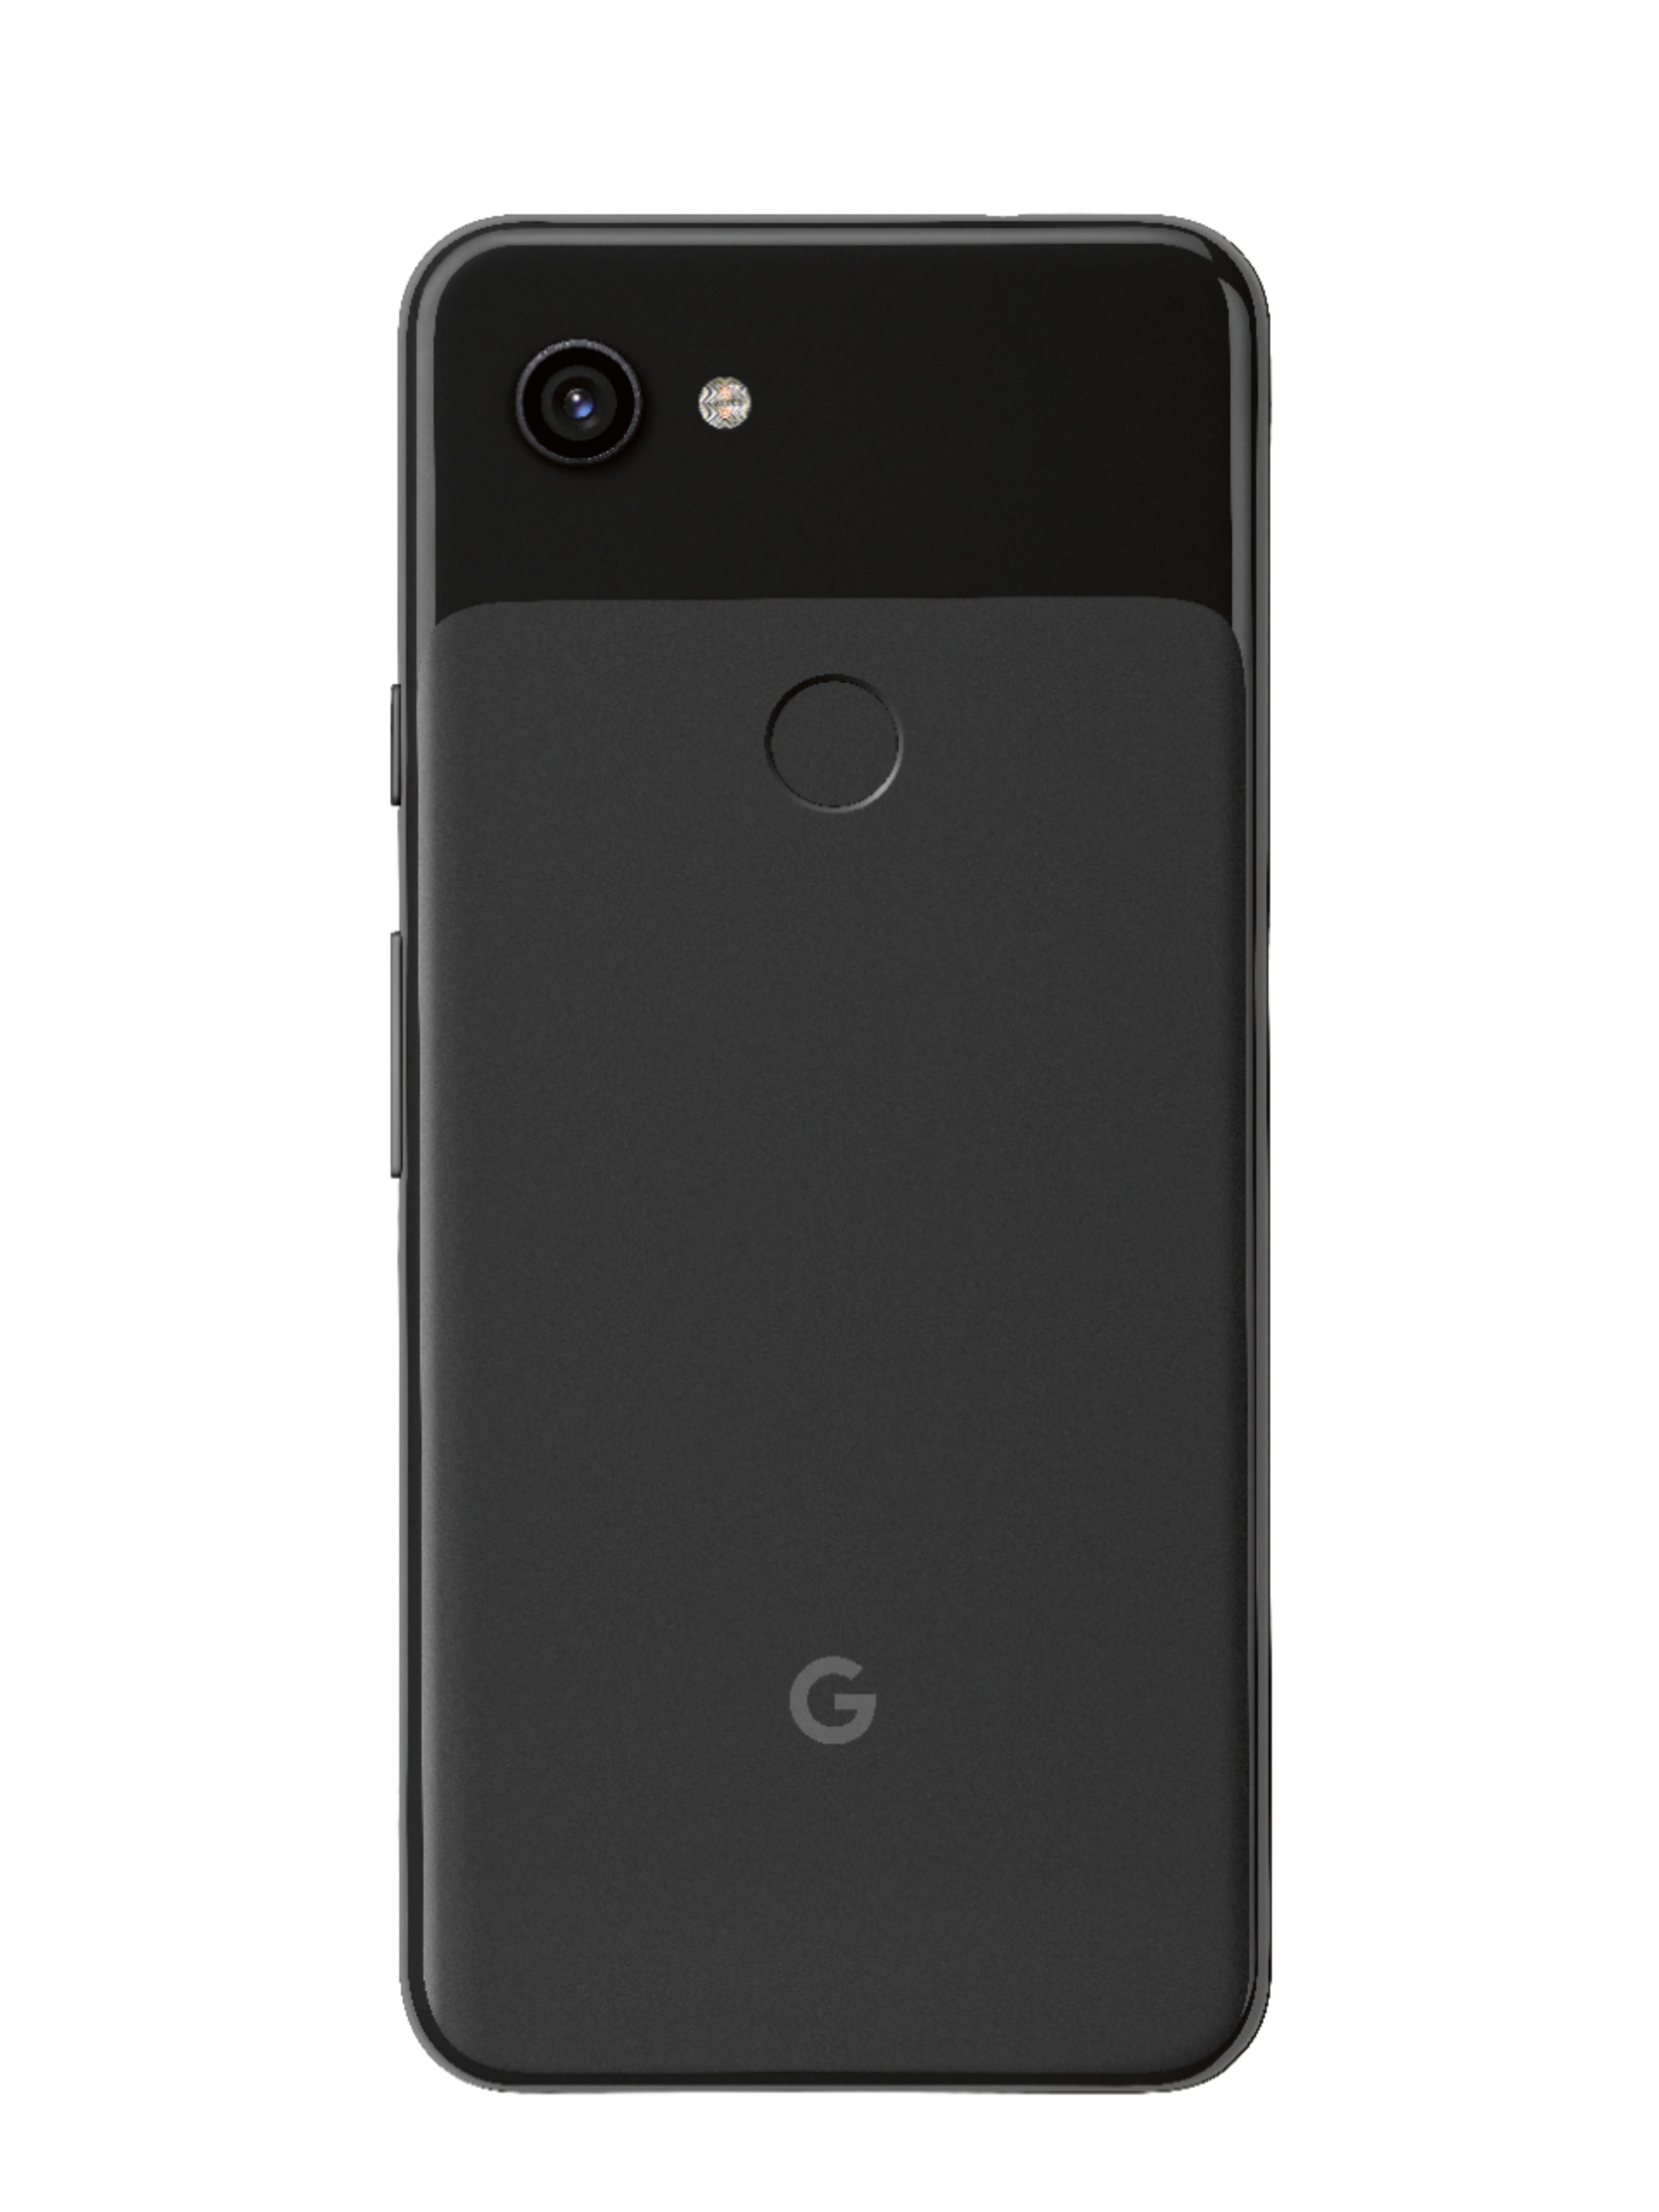 Back View: Google - Geek Squad Certified Refurbished Pixel 3a - 64GB (Unlocked) - Just Black